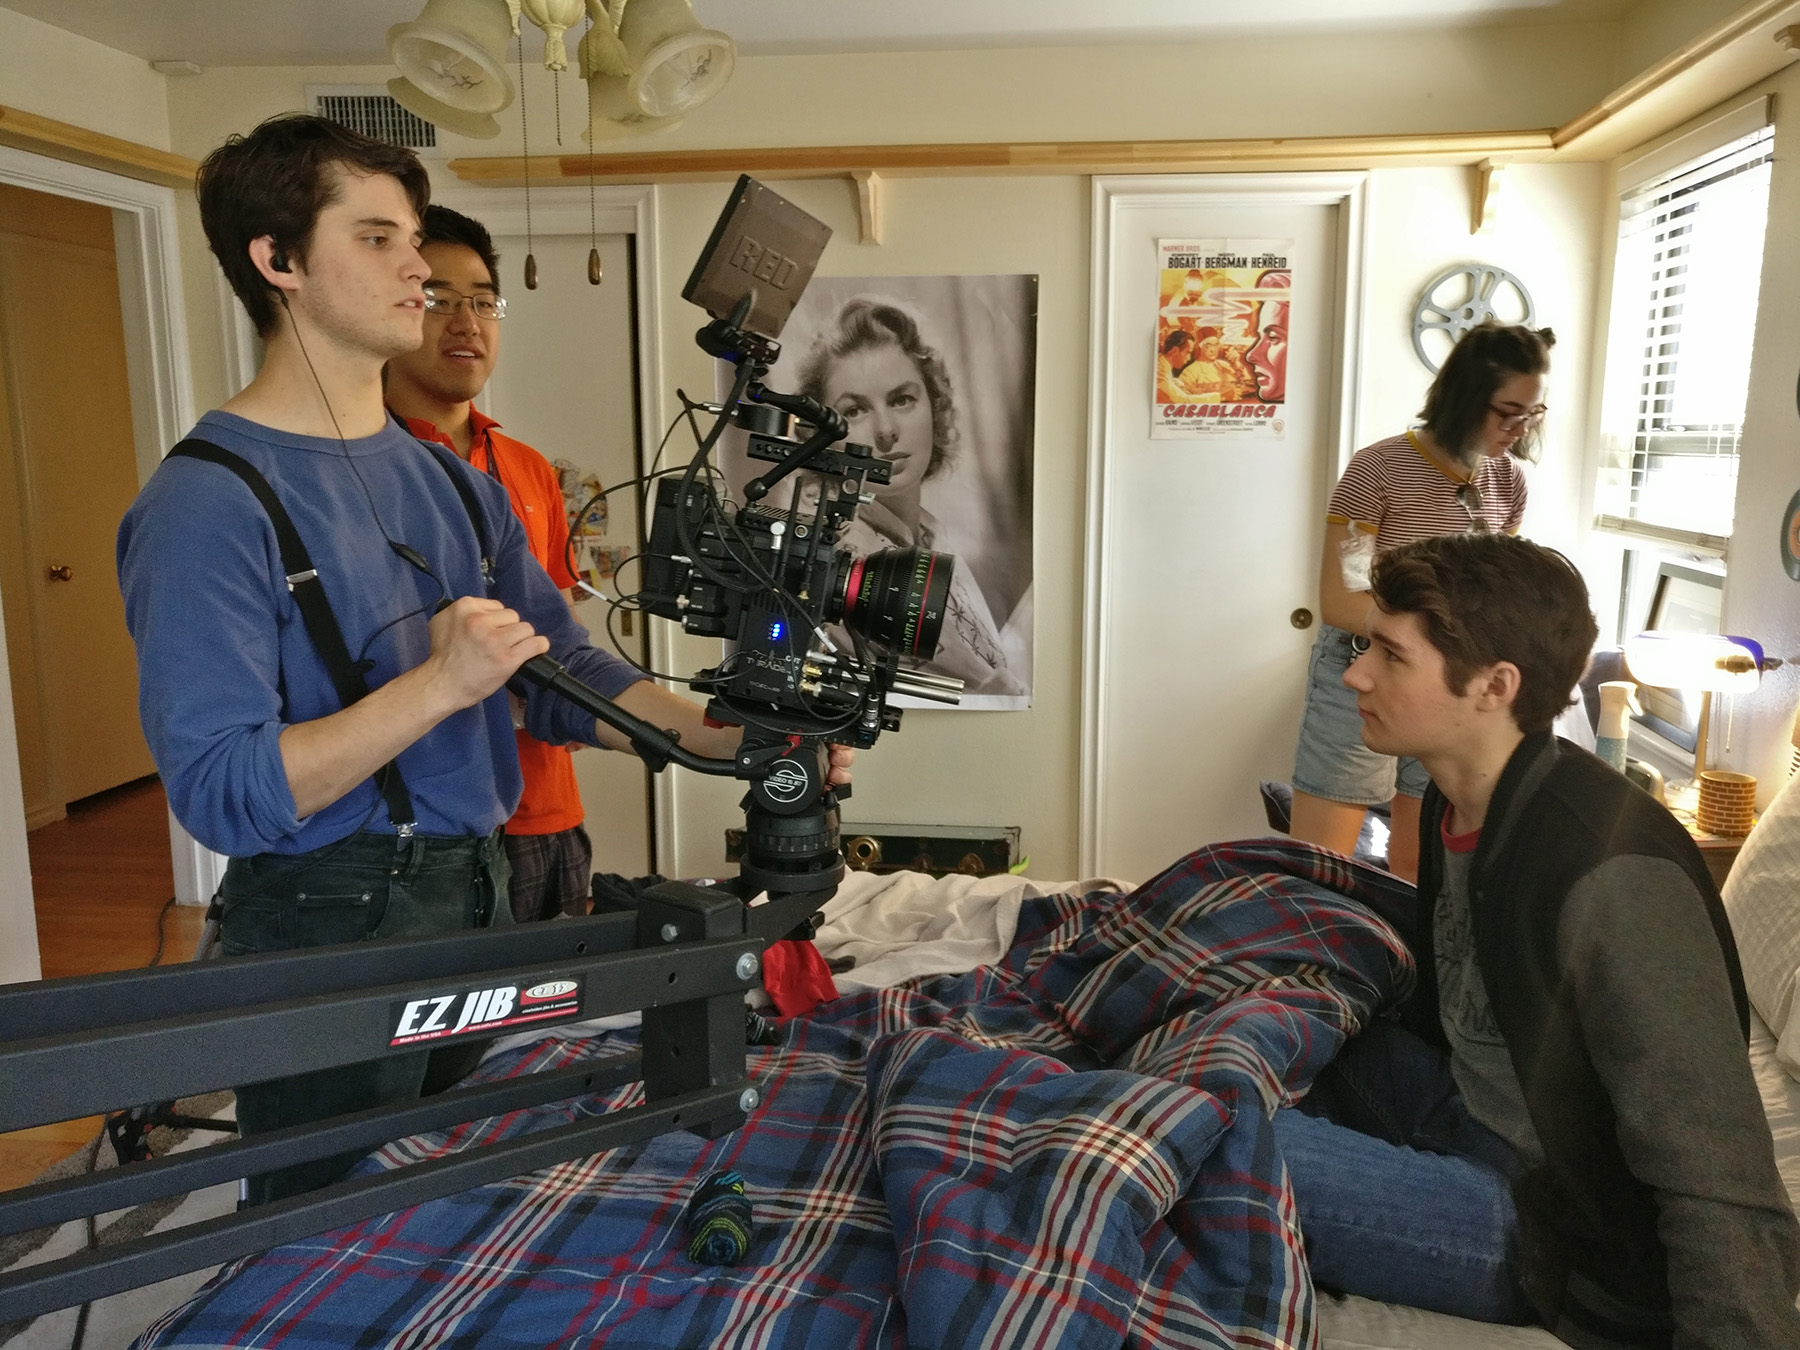 film shoot behind the scenes in a bedroom